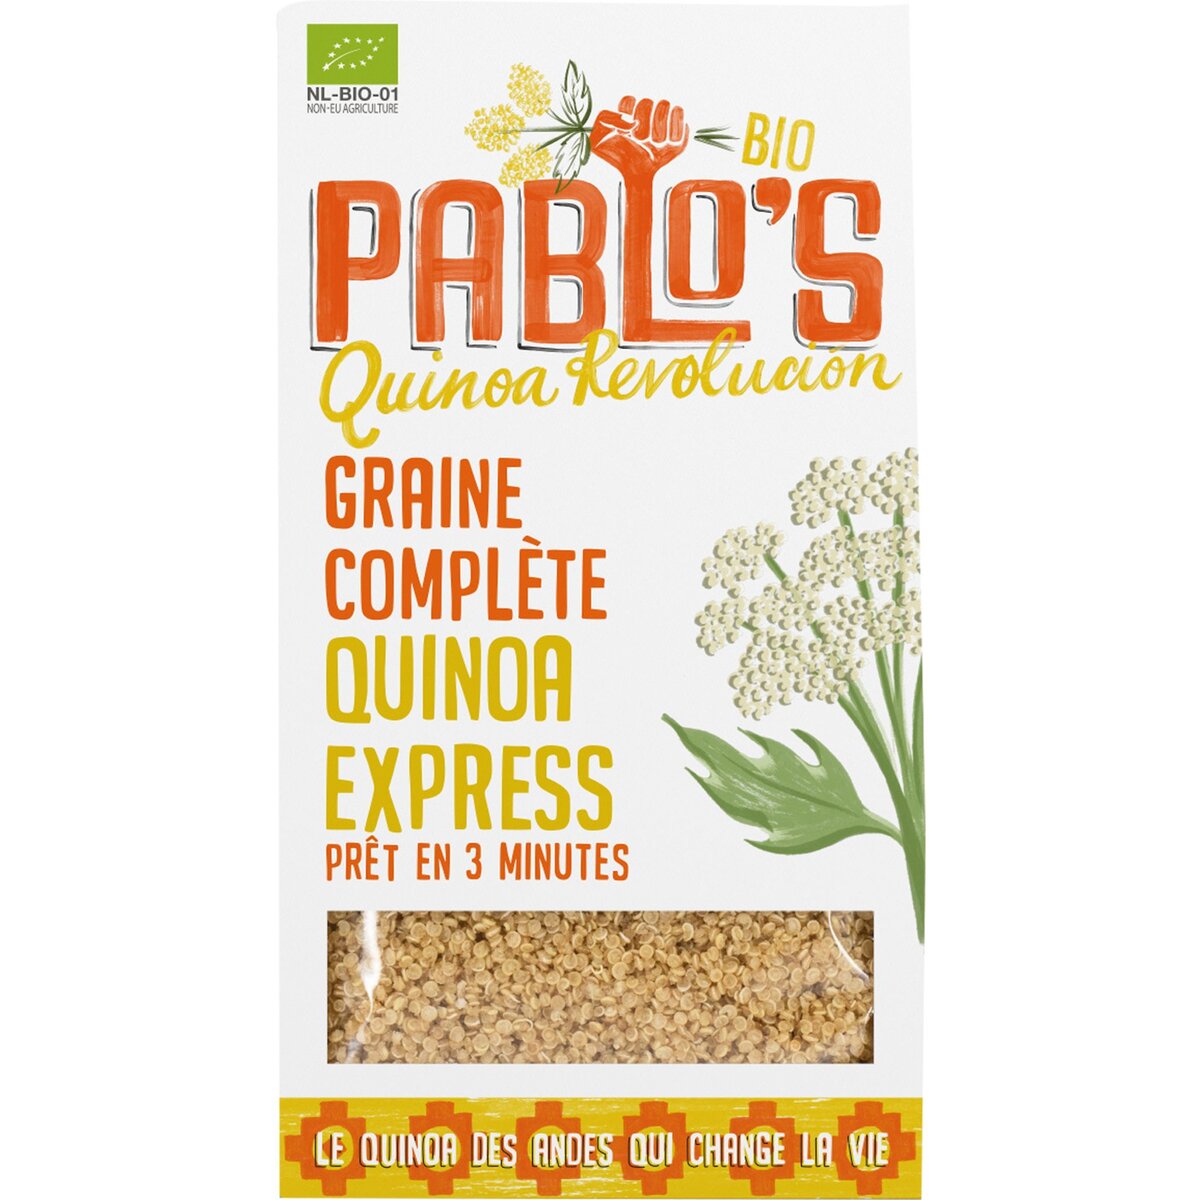 PABLO'S Quinoa bio graine complète express 200g